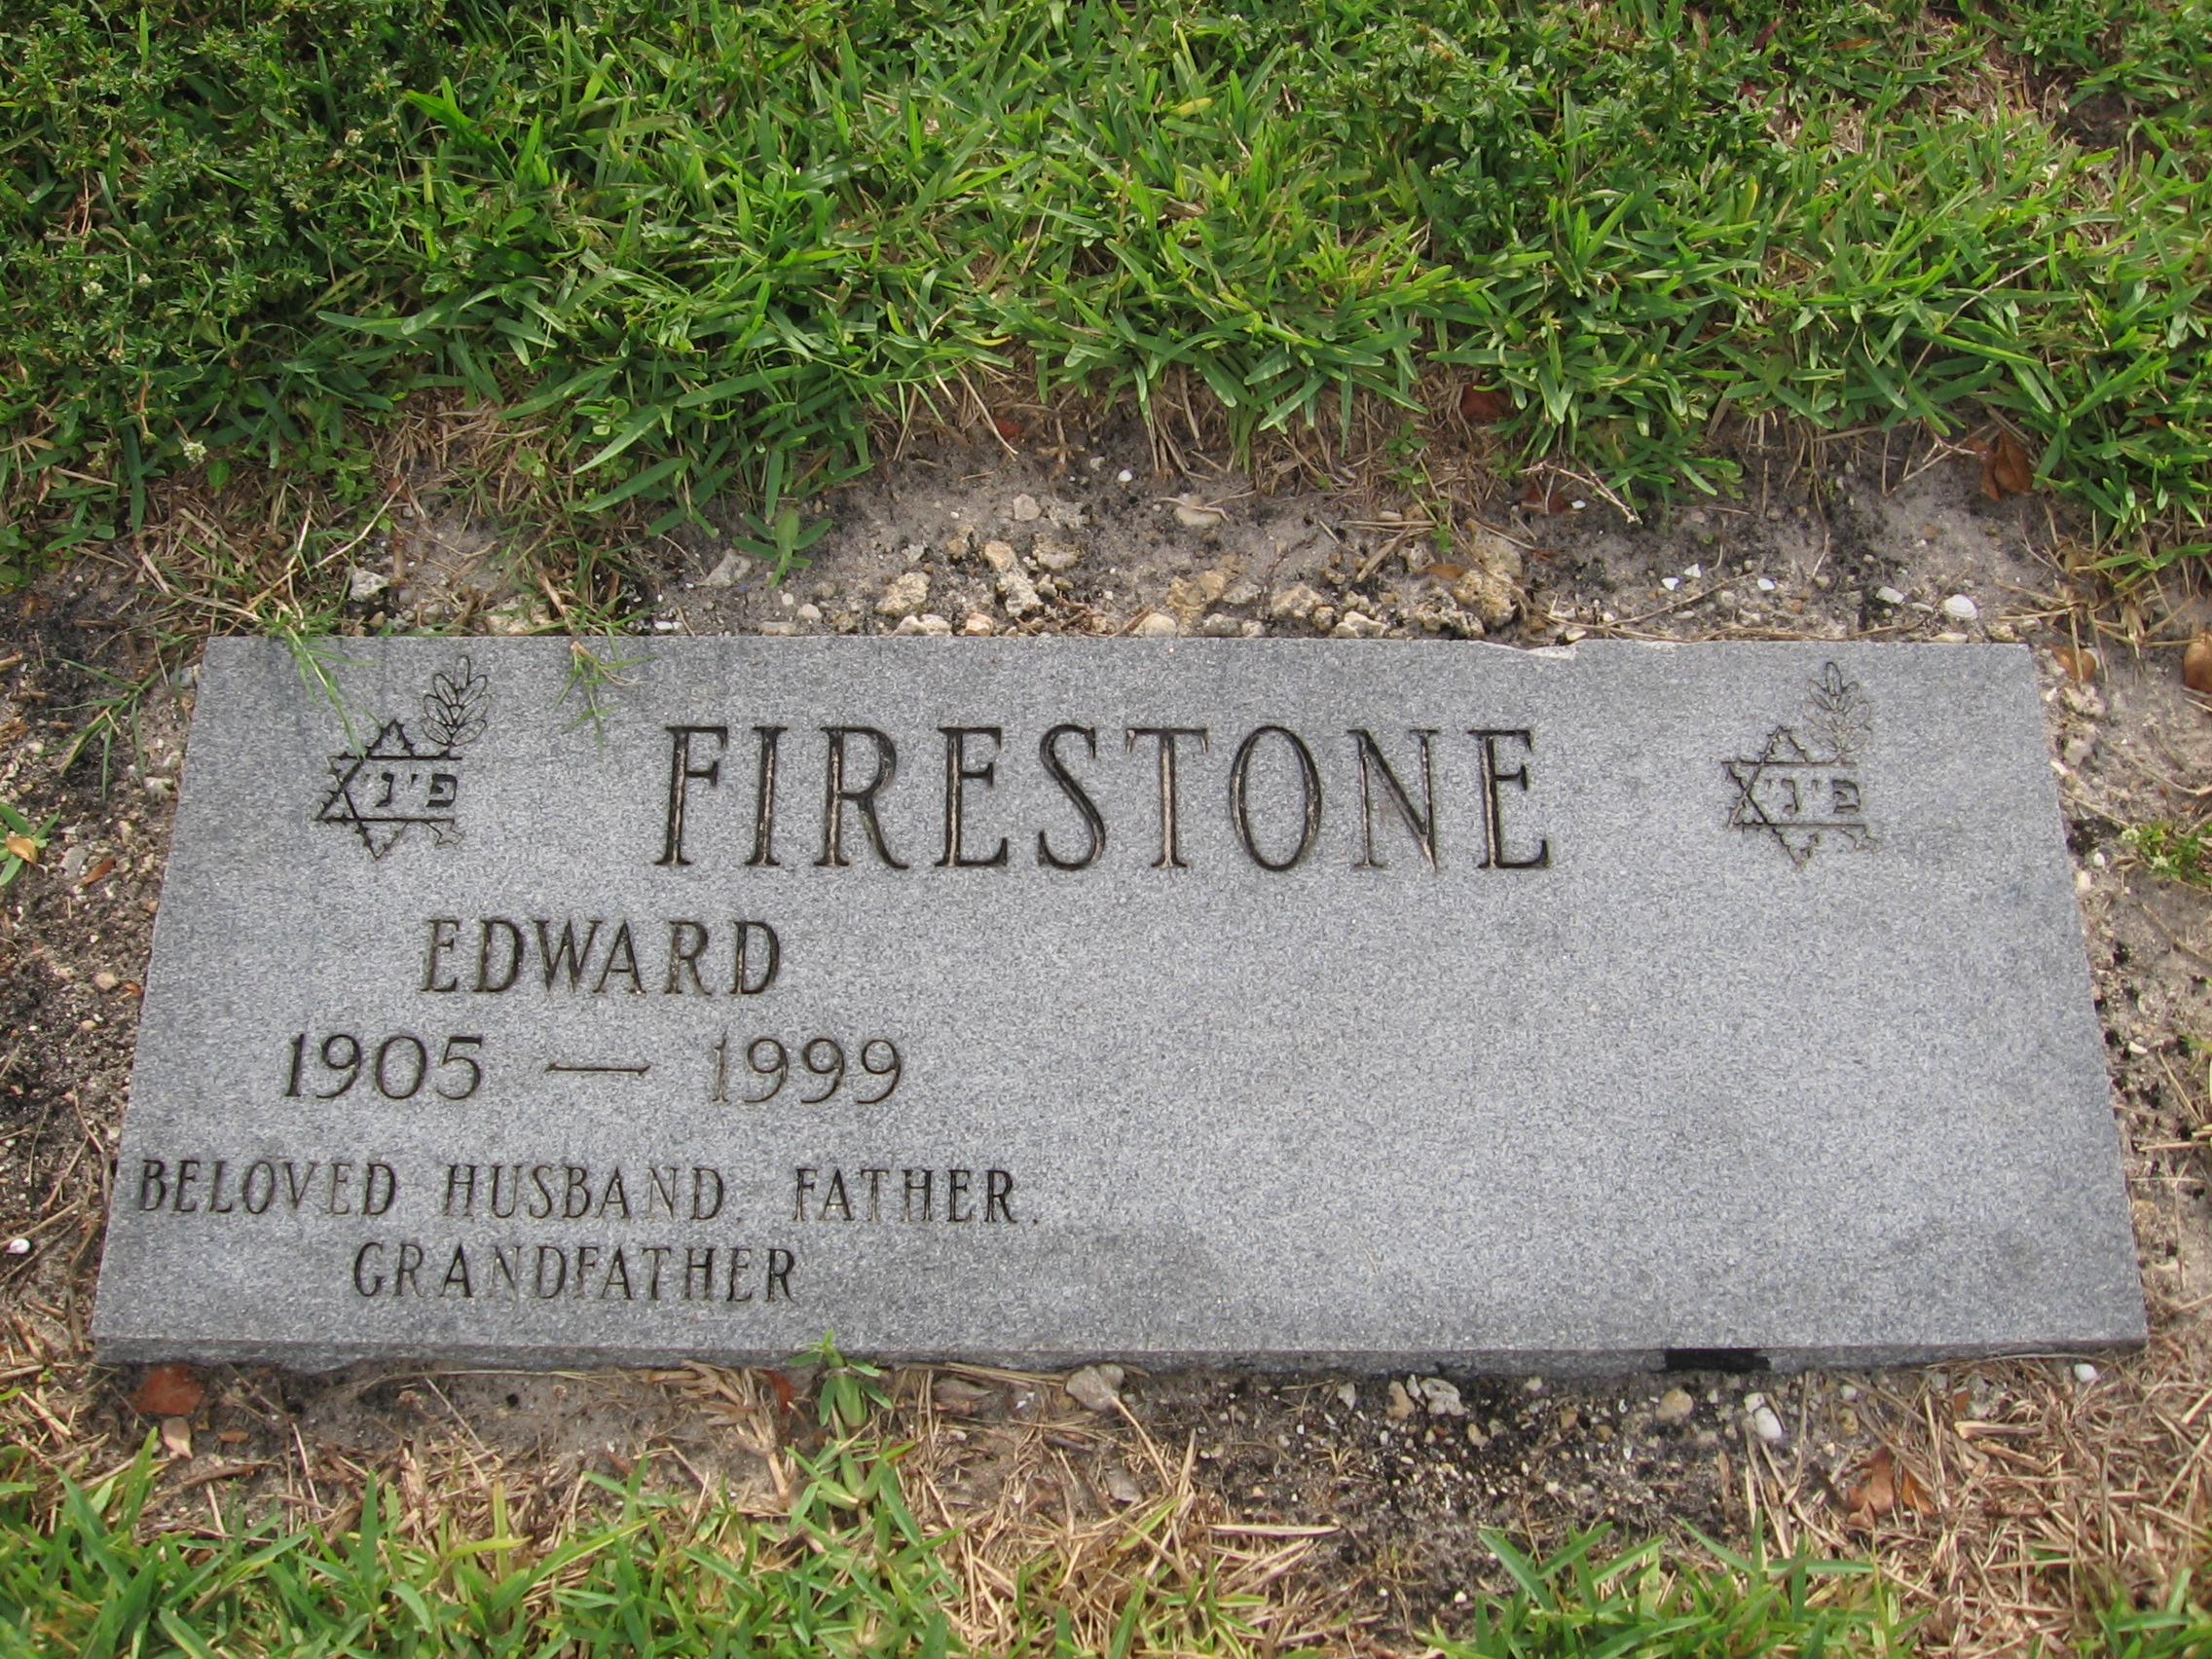 Edward Firestone